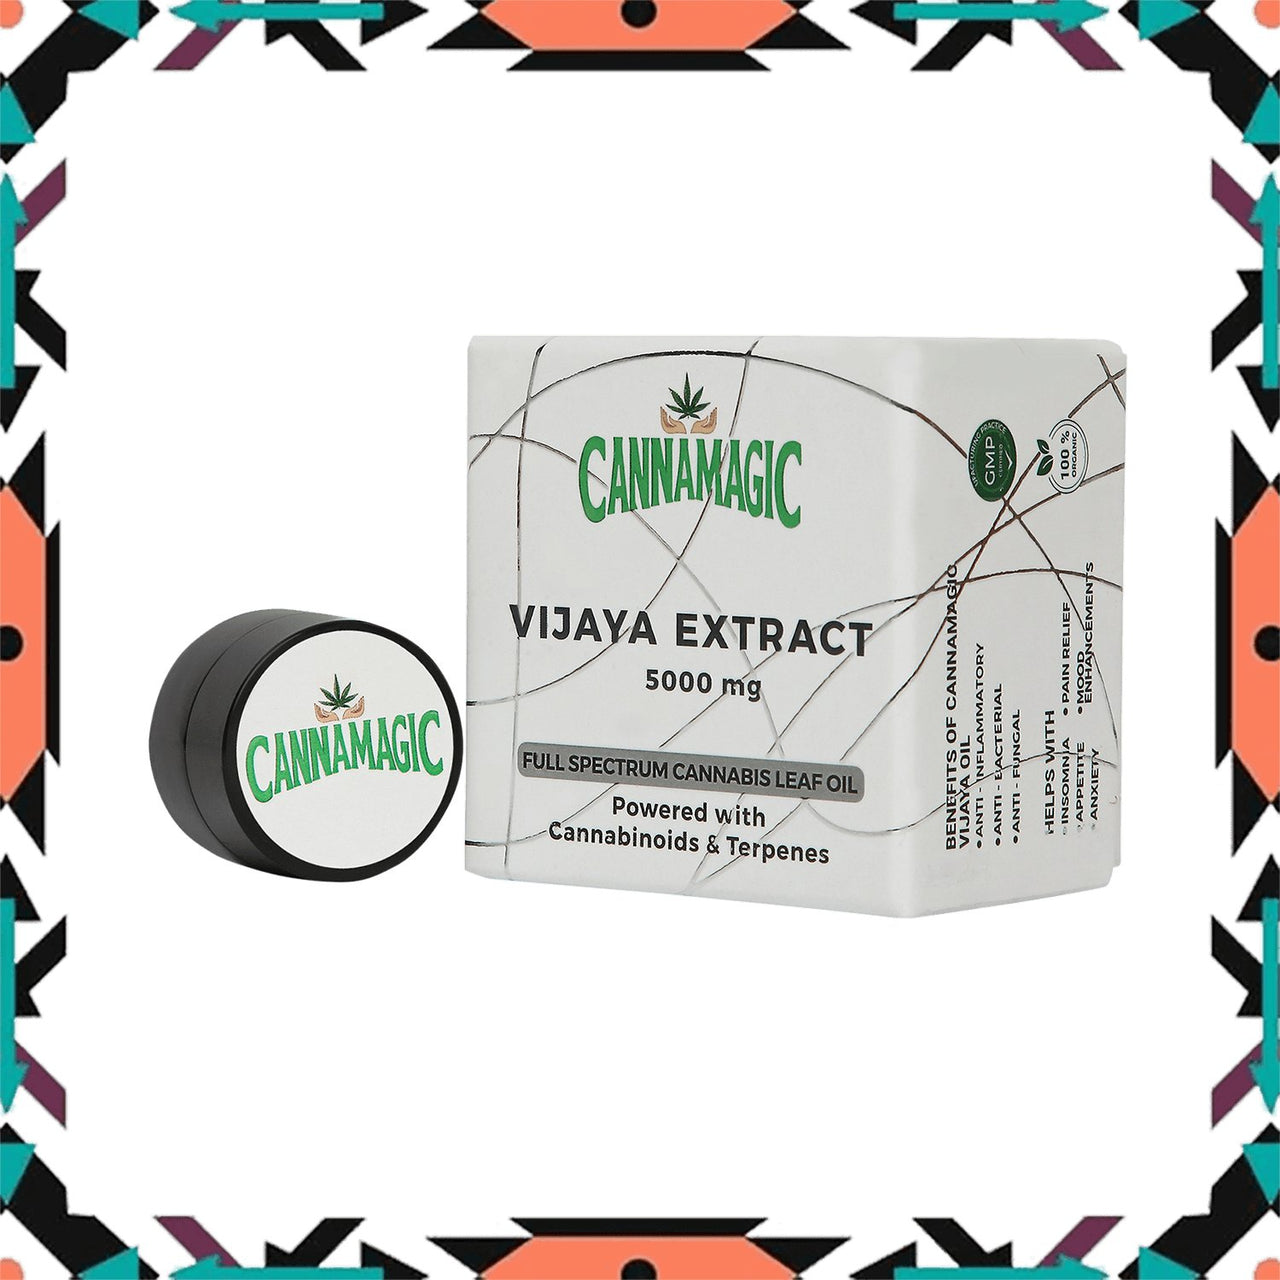 Anandamide Collection - Cannamagic Vijaya Extract (5000 mg)- Full Spectrum Cannabis Leaf Oil - CBD Store India